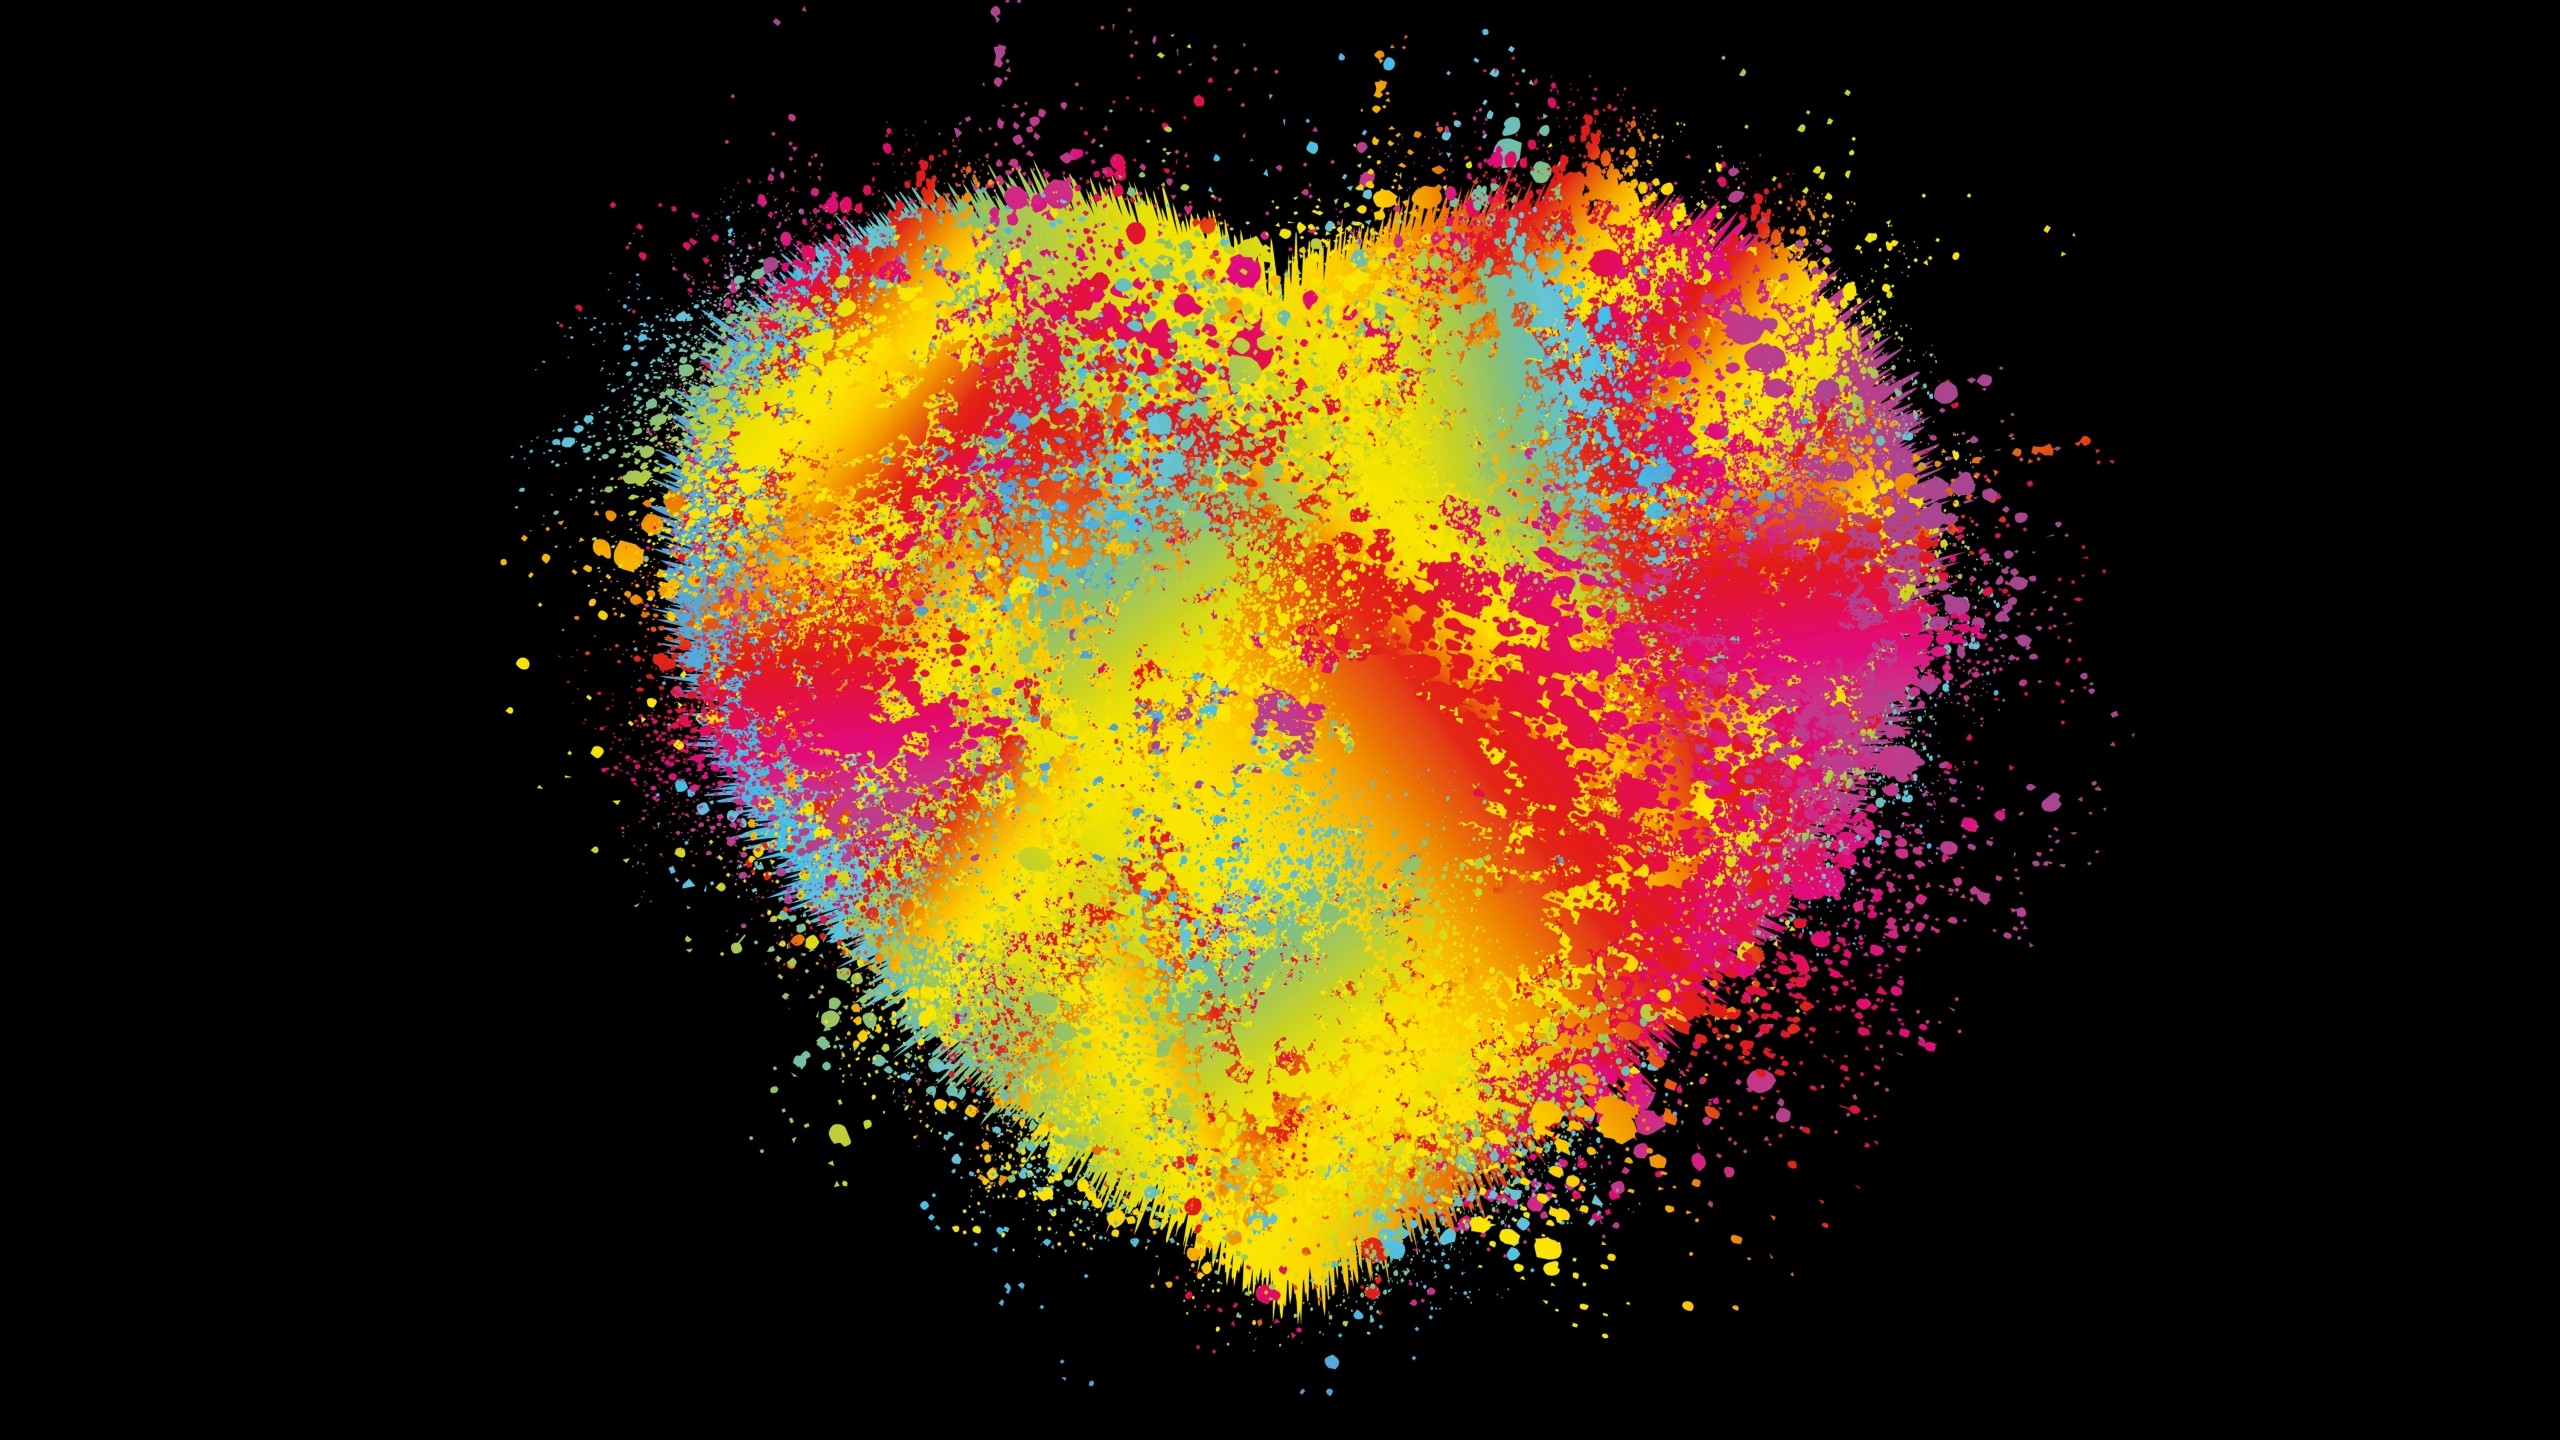 General 2560x1440 digital art black background minimalism colorful paint splatter dots heart (design) artwork